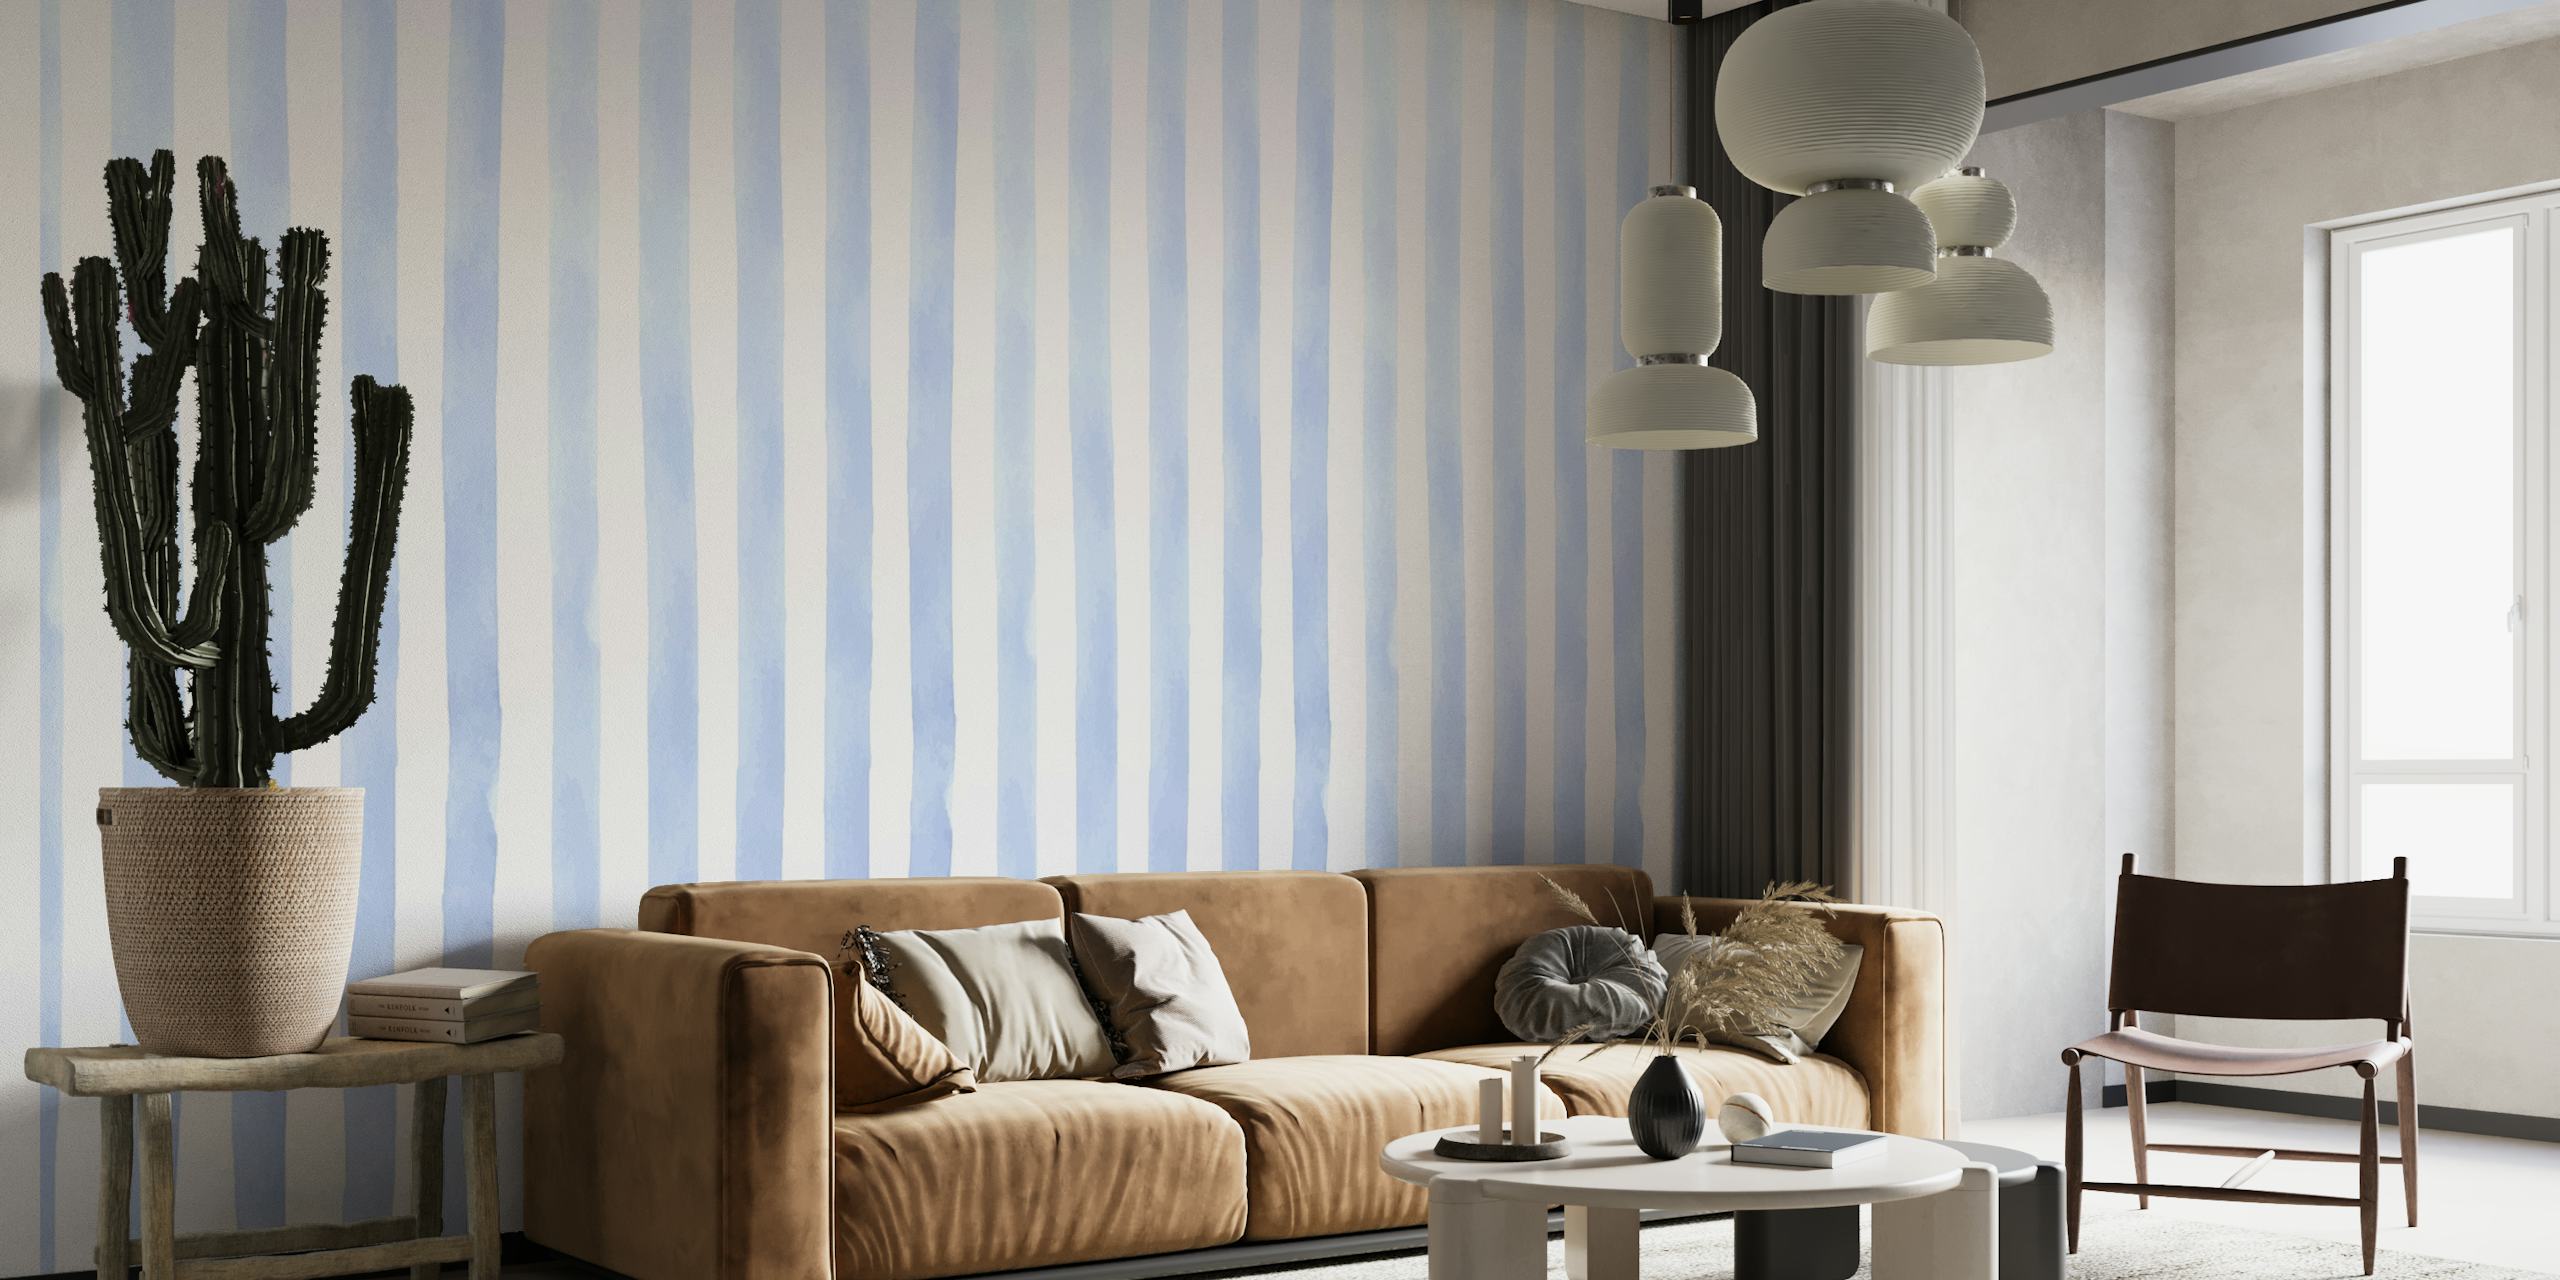 Tranquil Blue watercolor stripe wallpaper mural